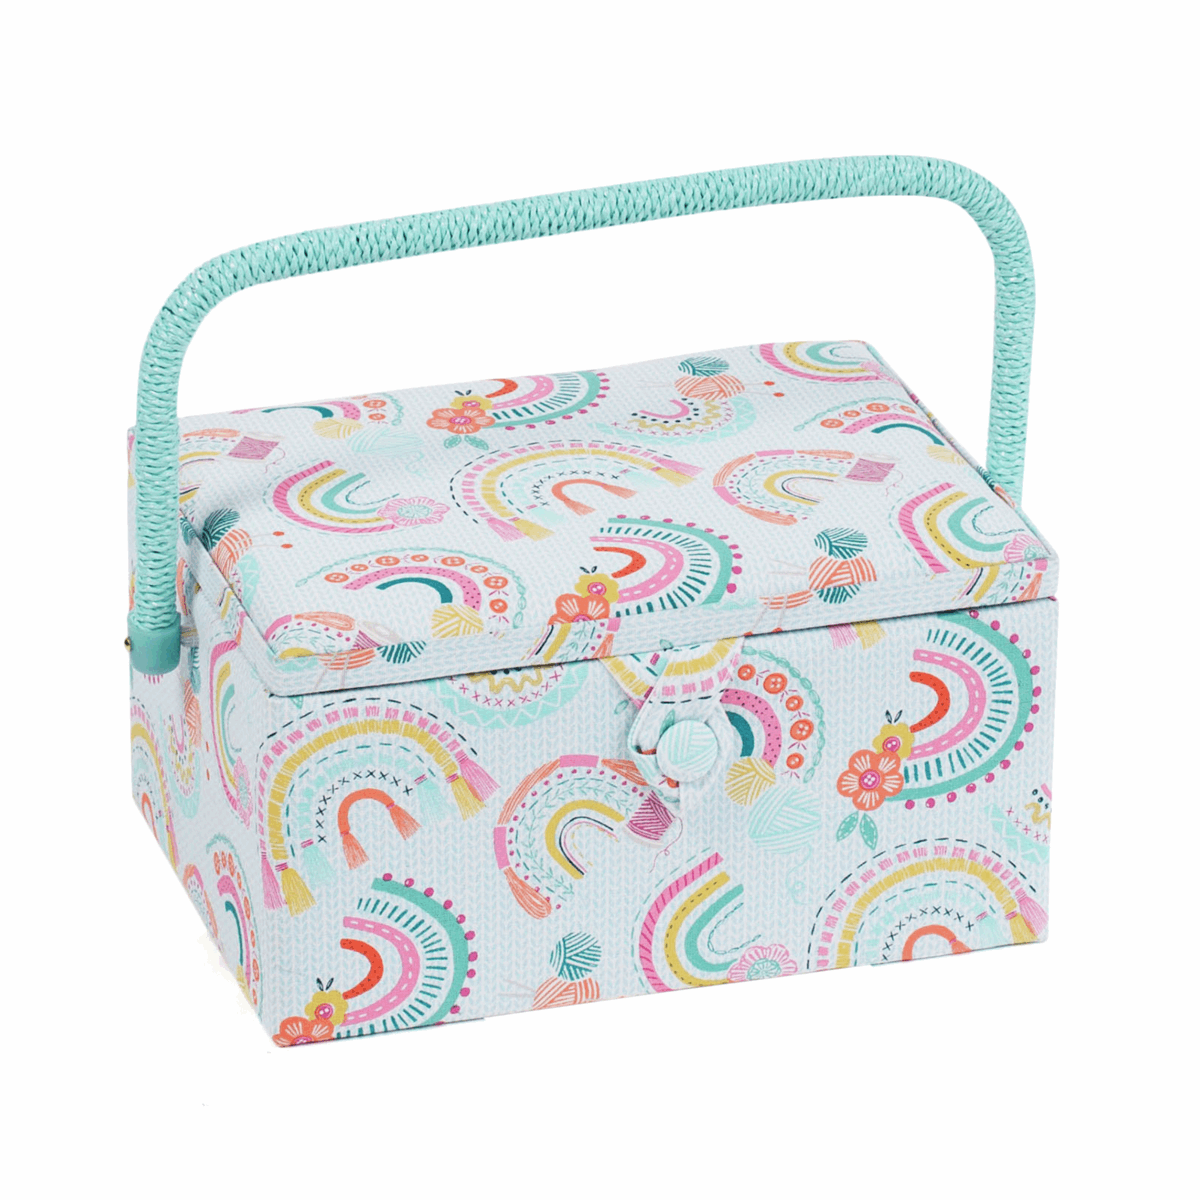 Rainbow Sewing Box - Medium